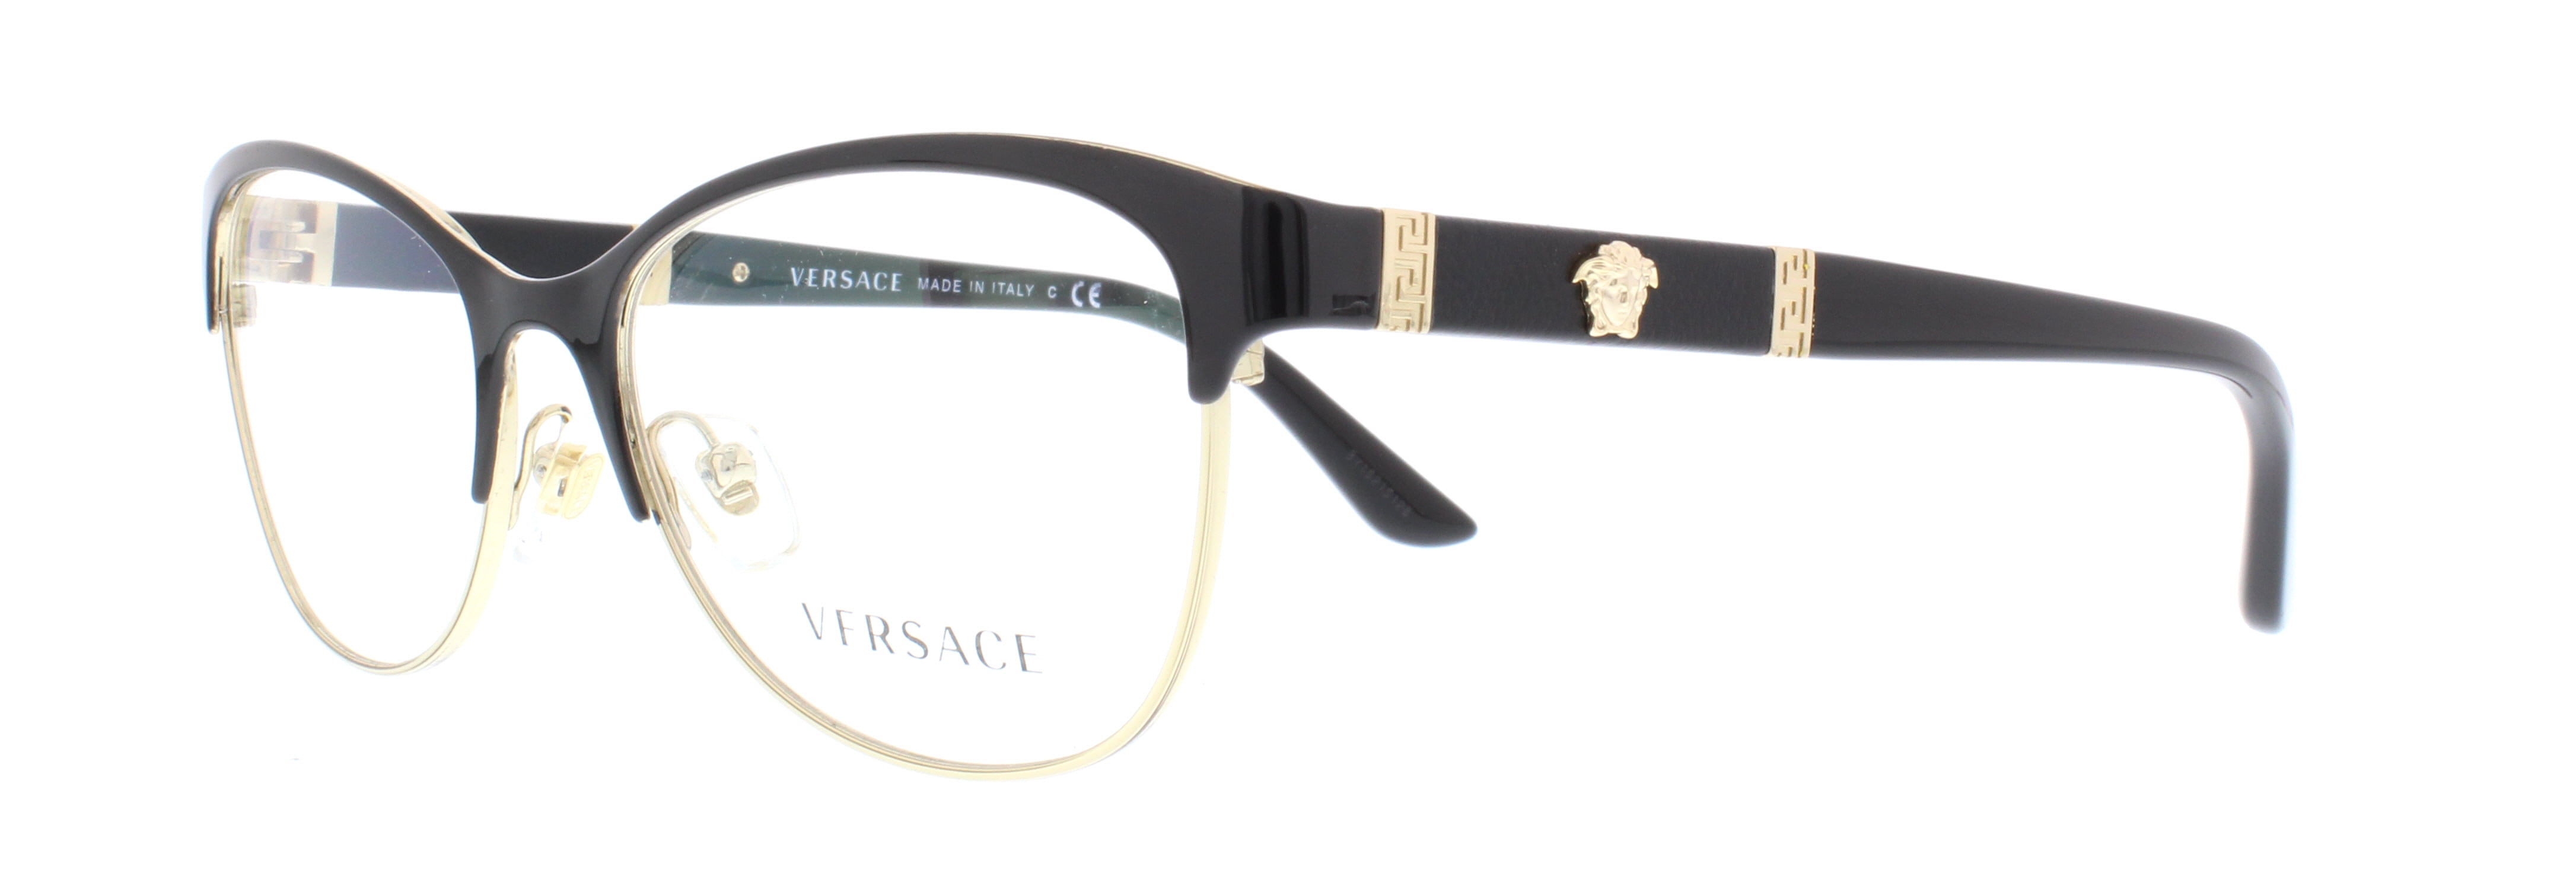 versace gold frame glasses